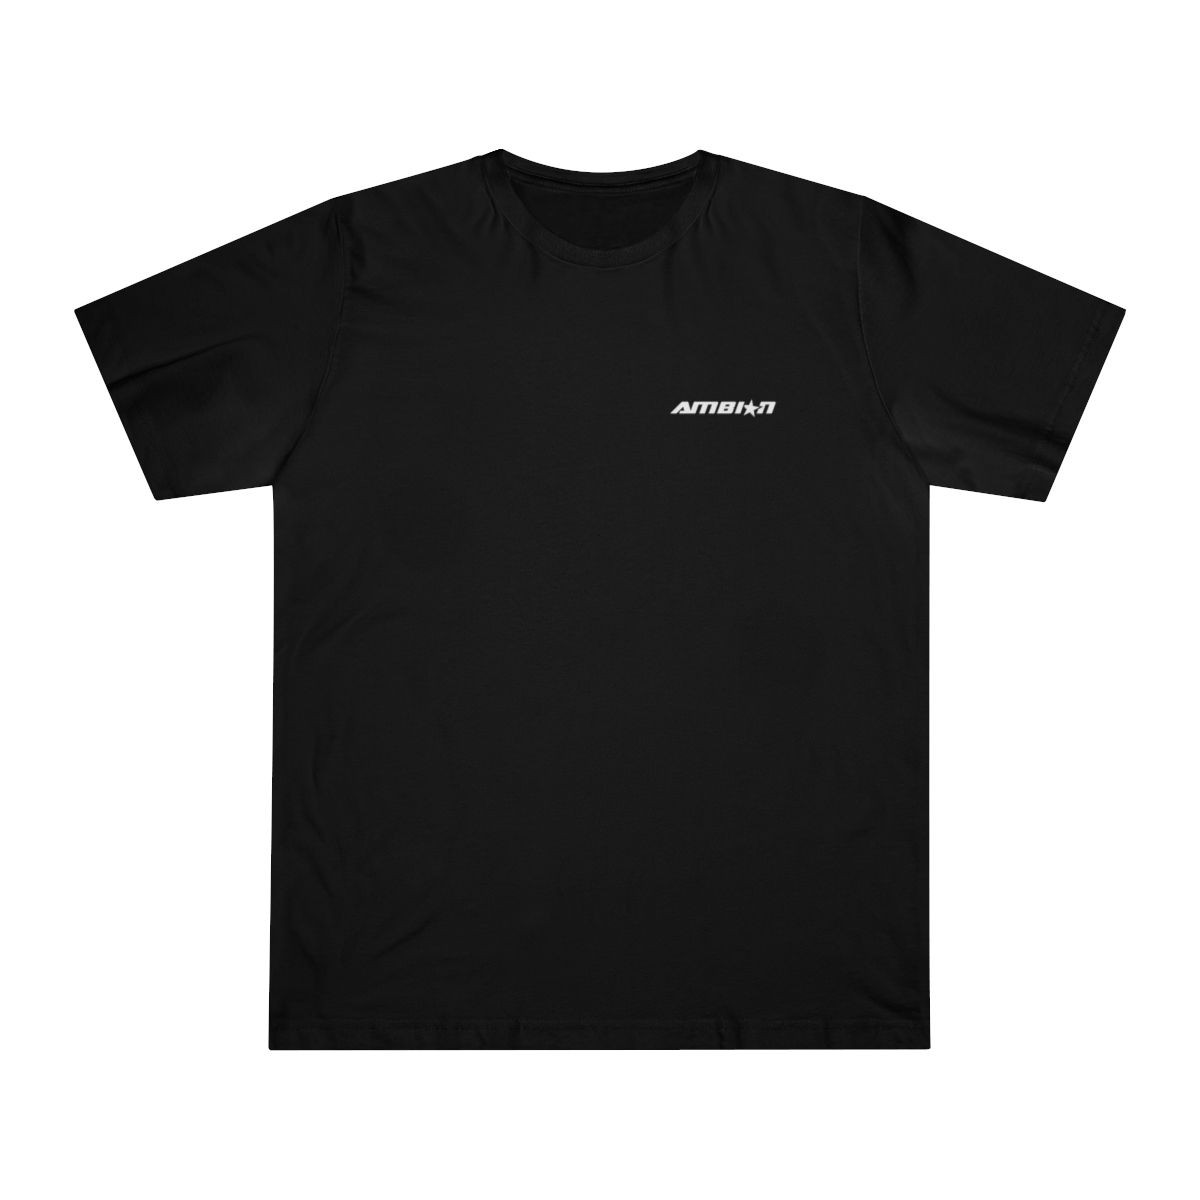 Affordable Timeless Black Shirt. Classic black plain shirt with logo